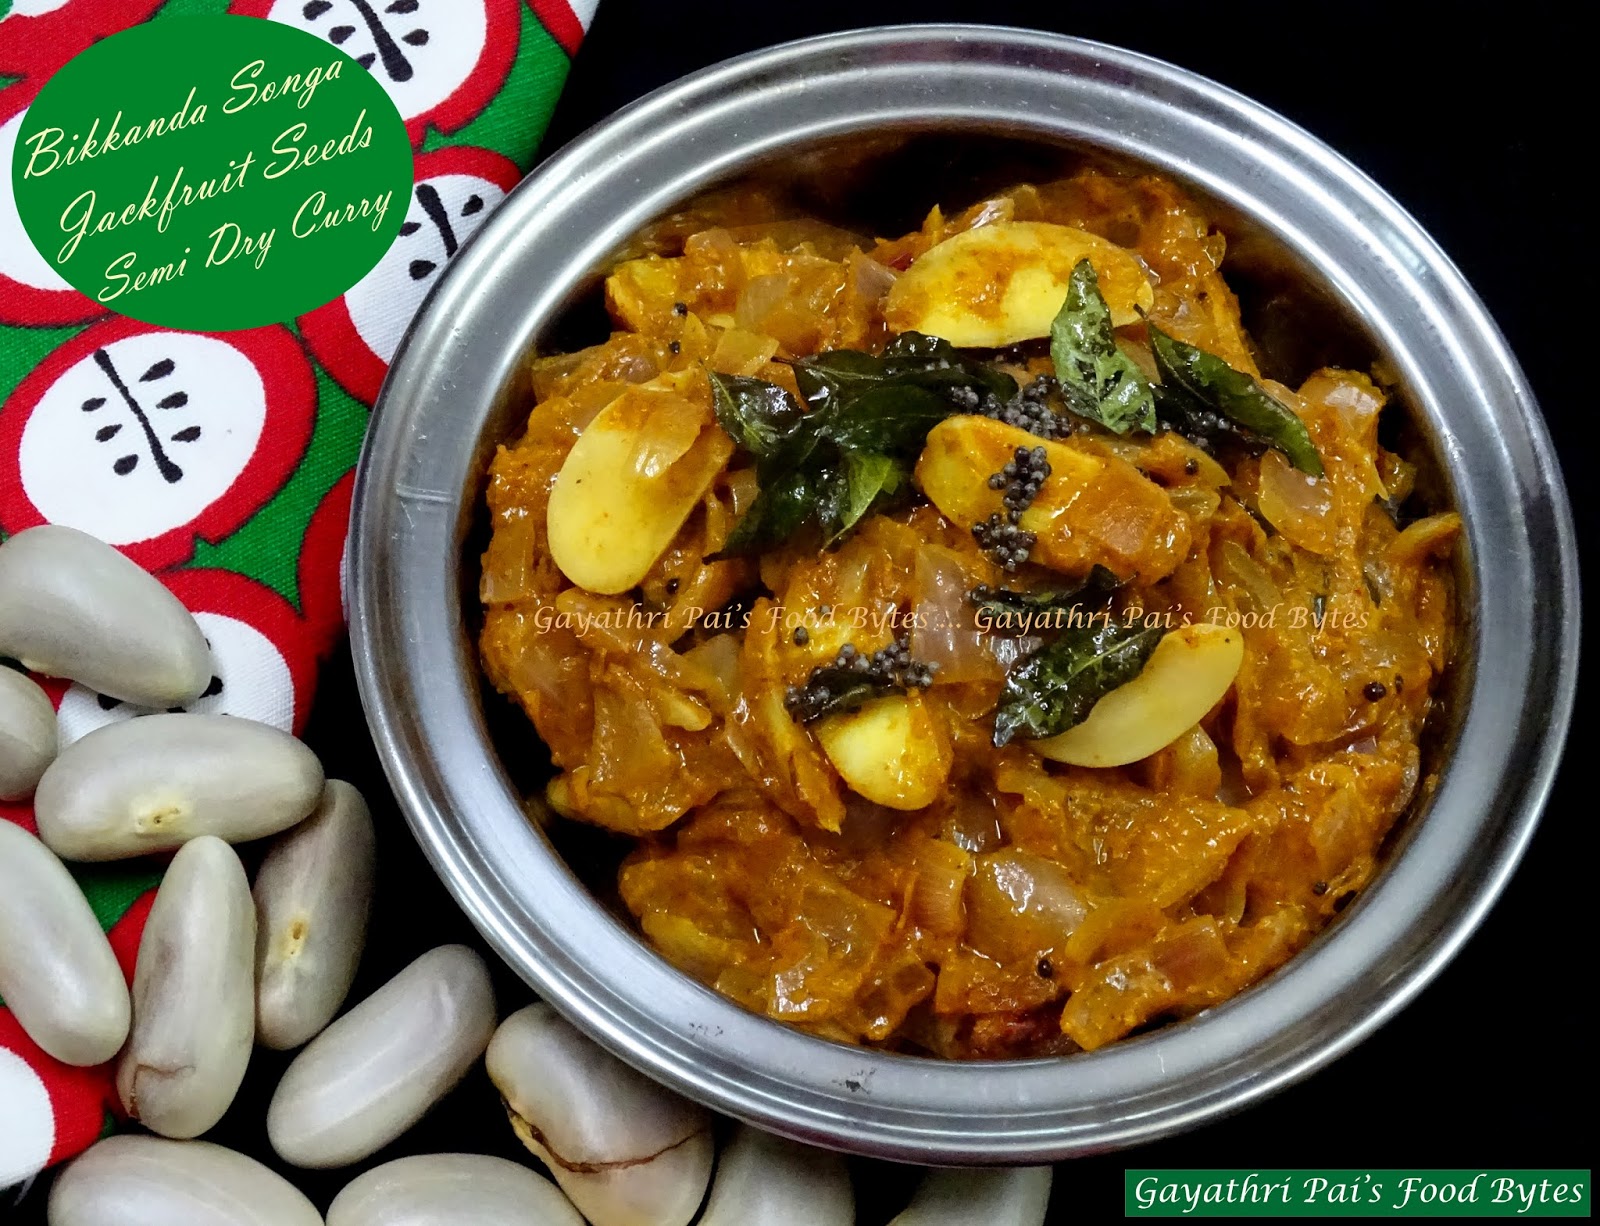 Gayathri Pai's Food Bytes: Bikkanda Songa/ Jackfruit Seed Semi Dry